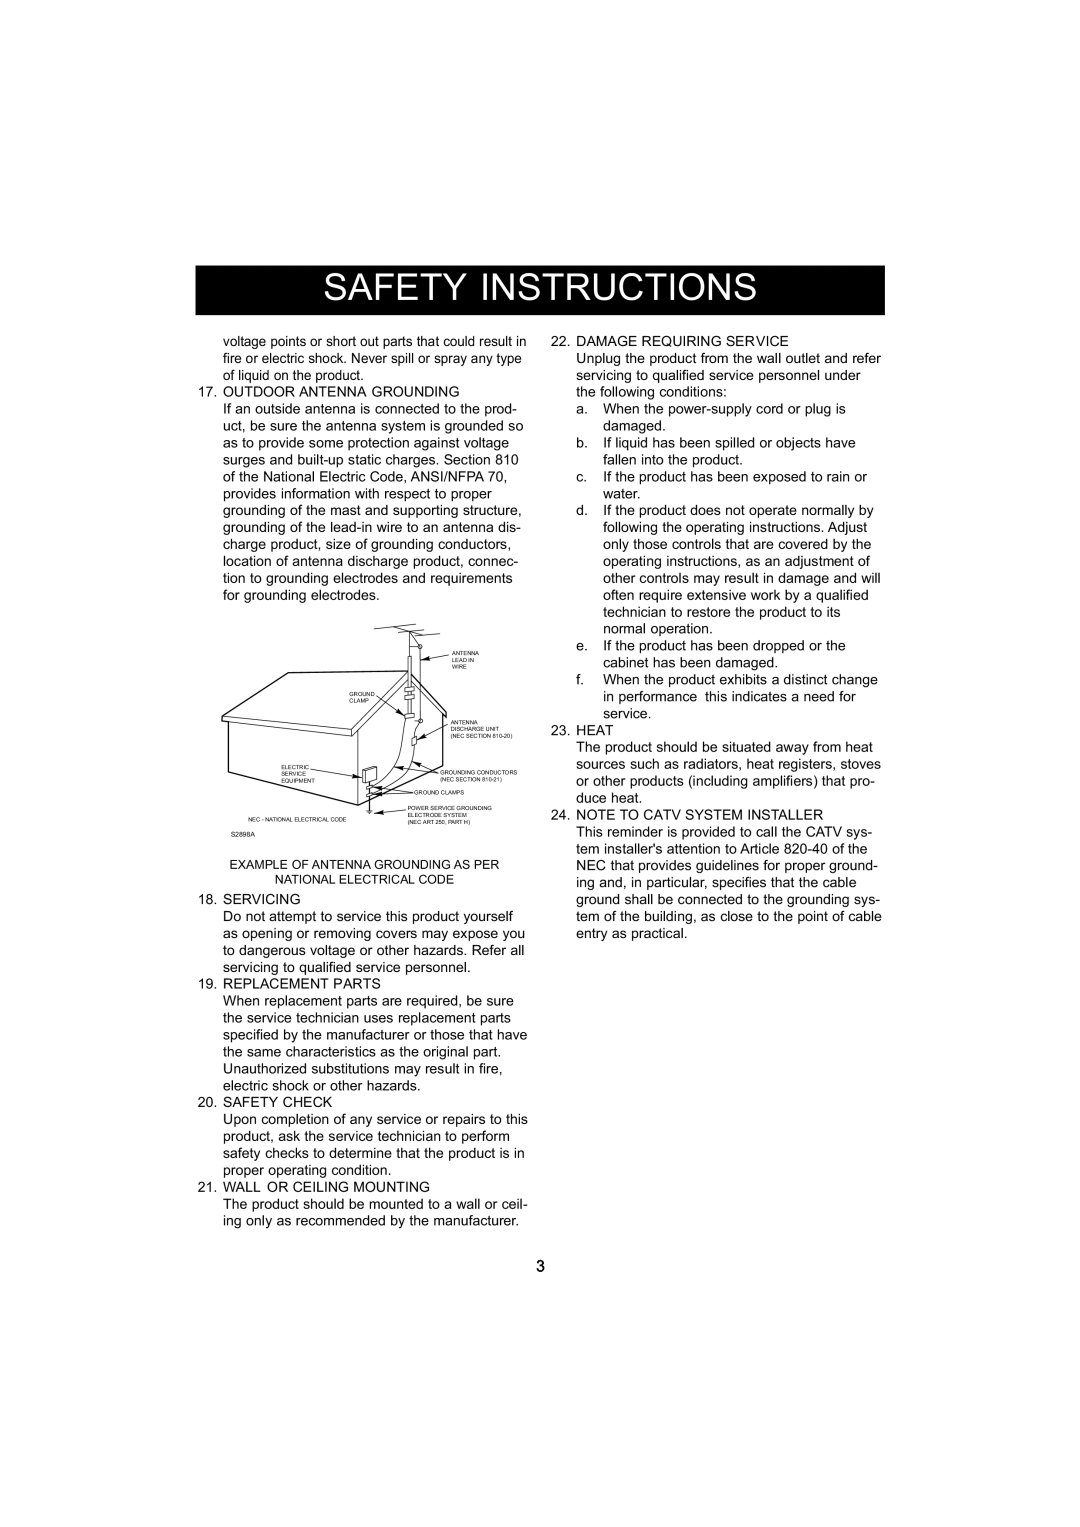 Jensen CD-545 instruction manual Safety Instructions, Outdoor Antenna Grounding 